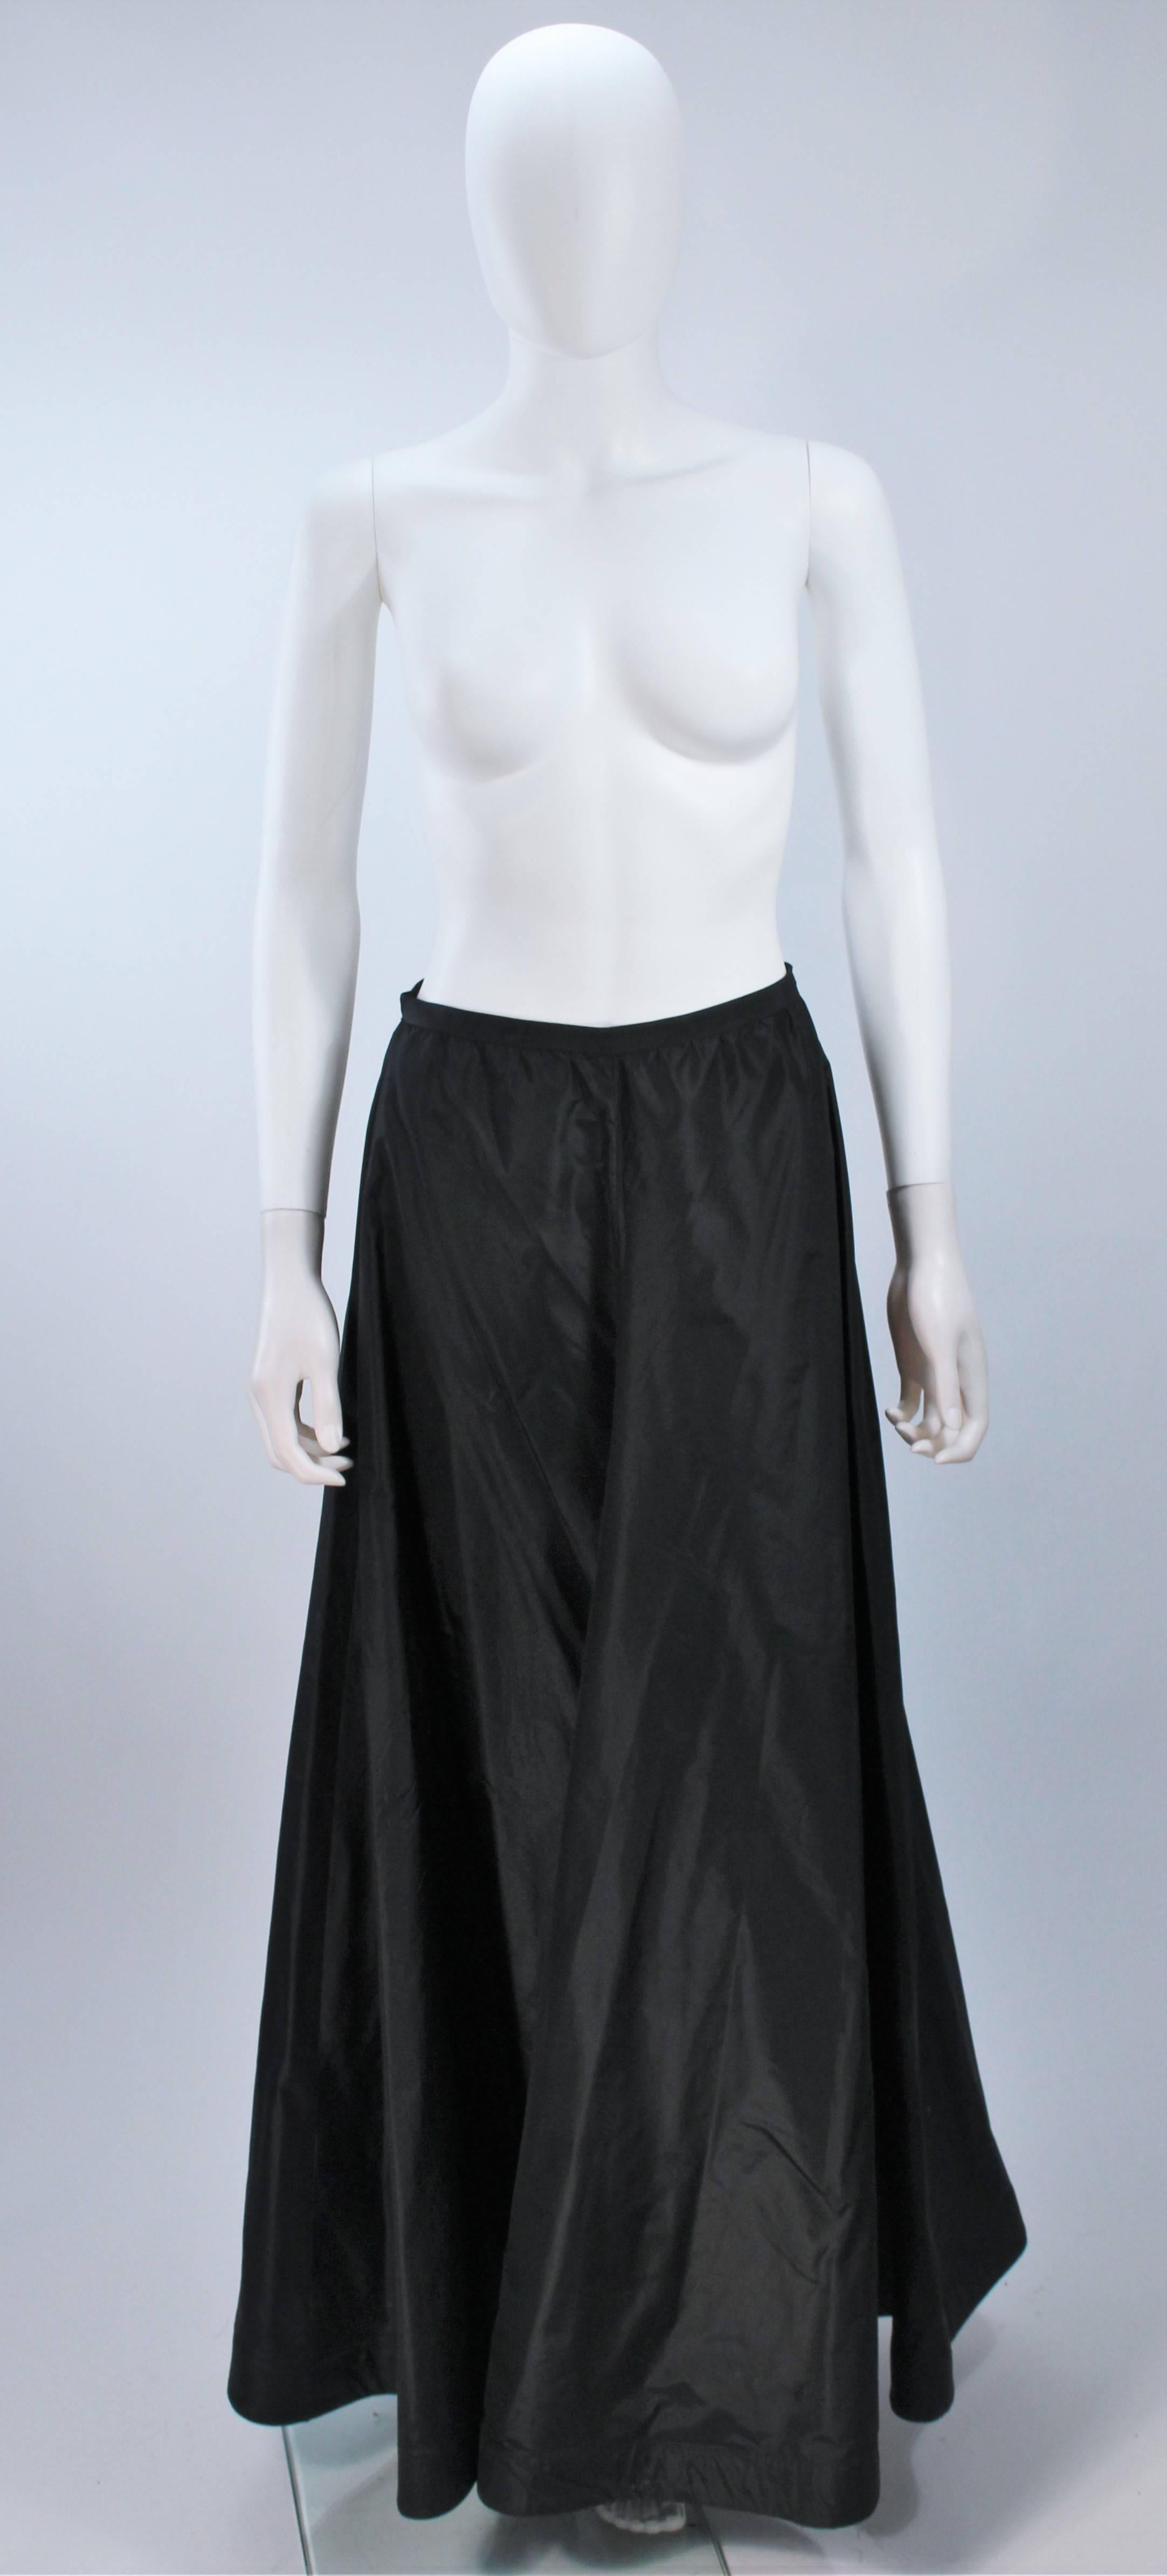 OSCAR DE LA RENTA Black Satin Gown and Embellished Jacket Ensemble Size 8 6